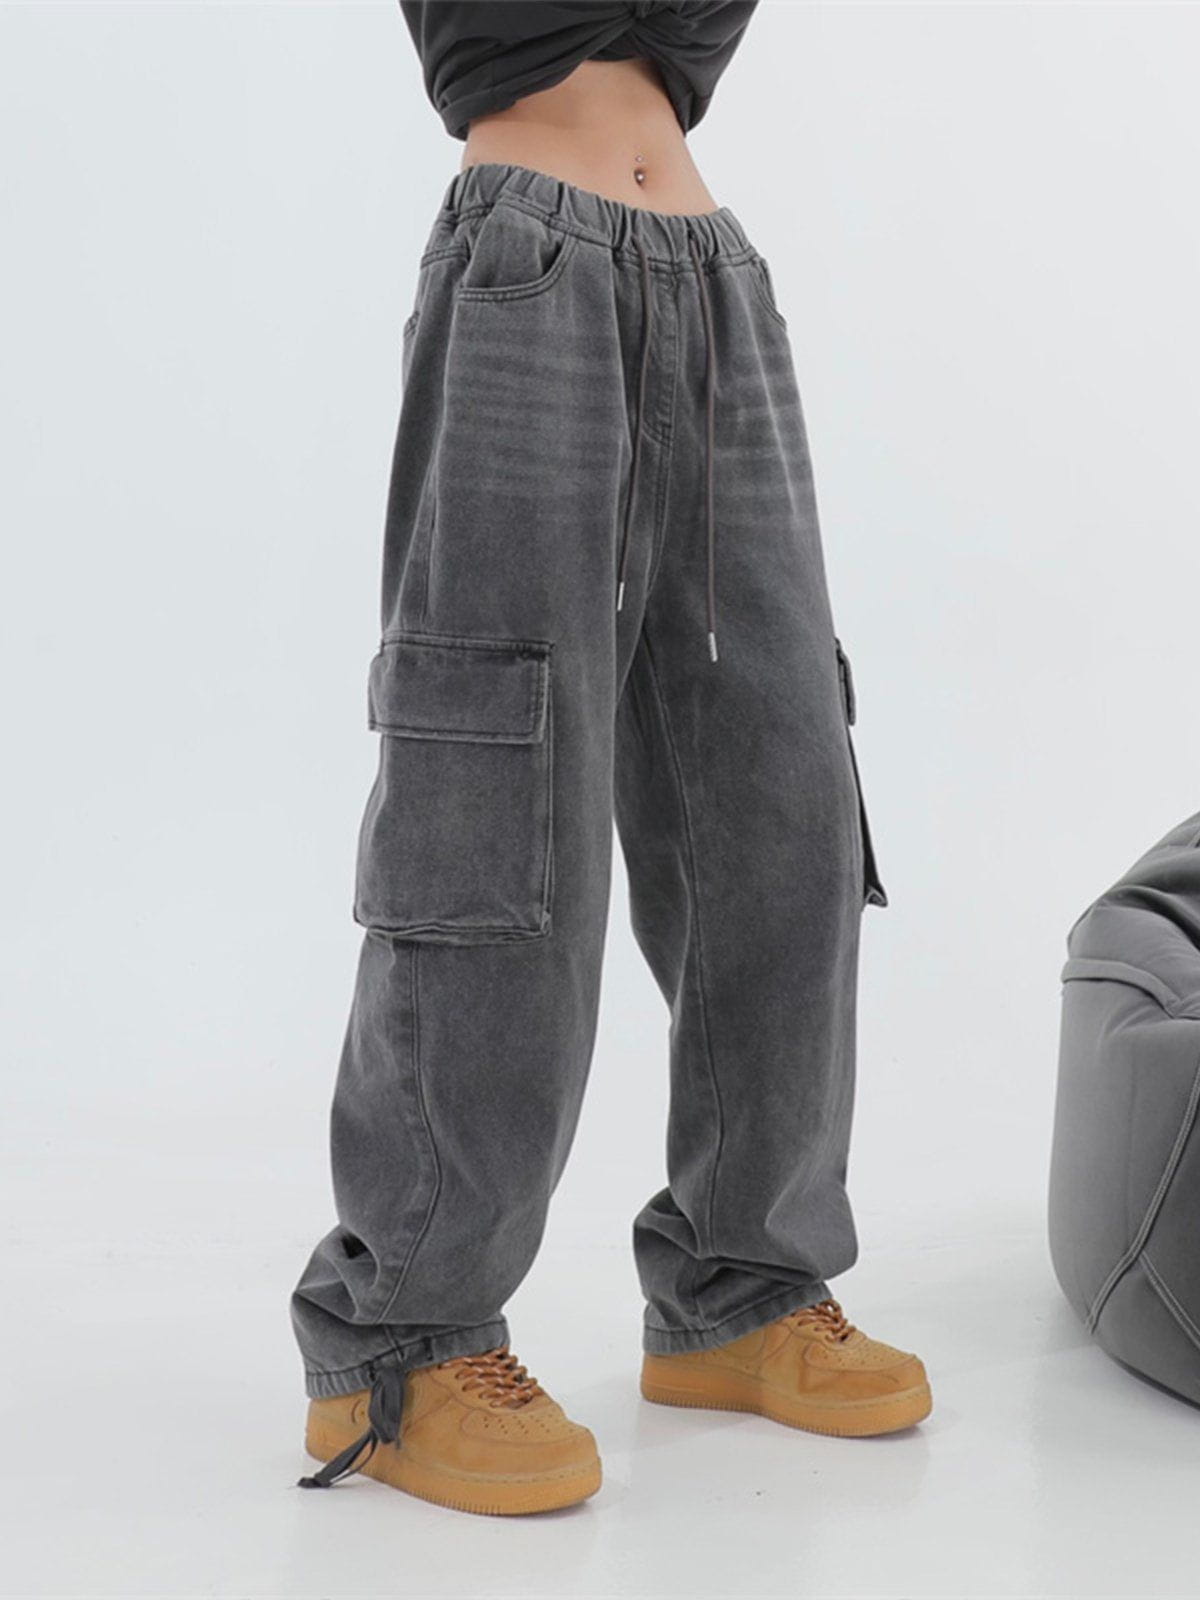 Majesda® - Vintage Big Pocket Pants outfit ideas streetwear fashion